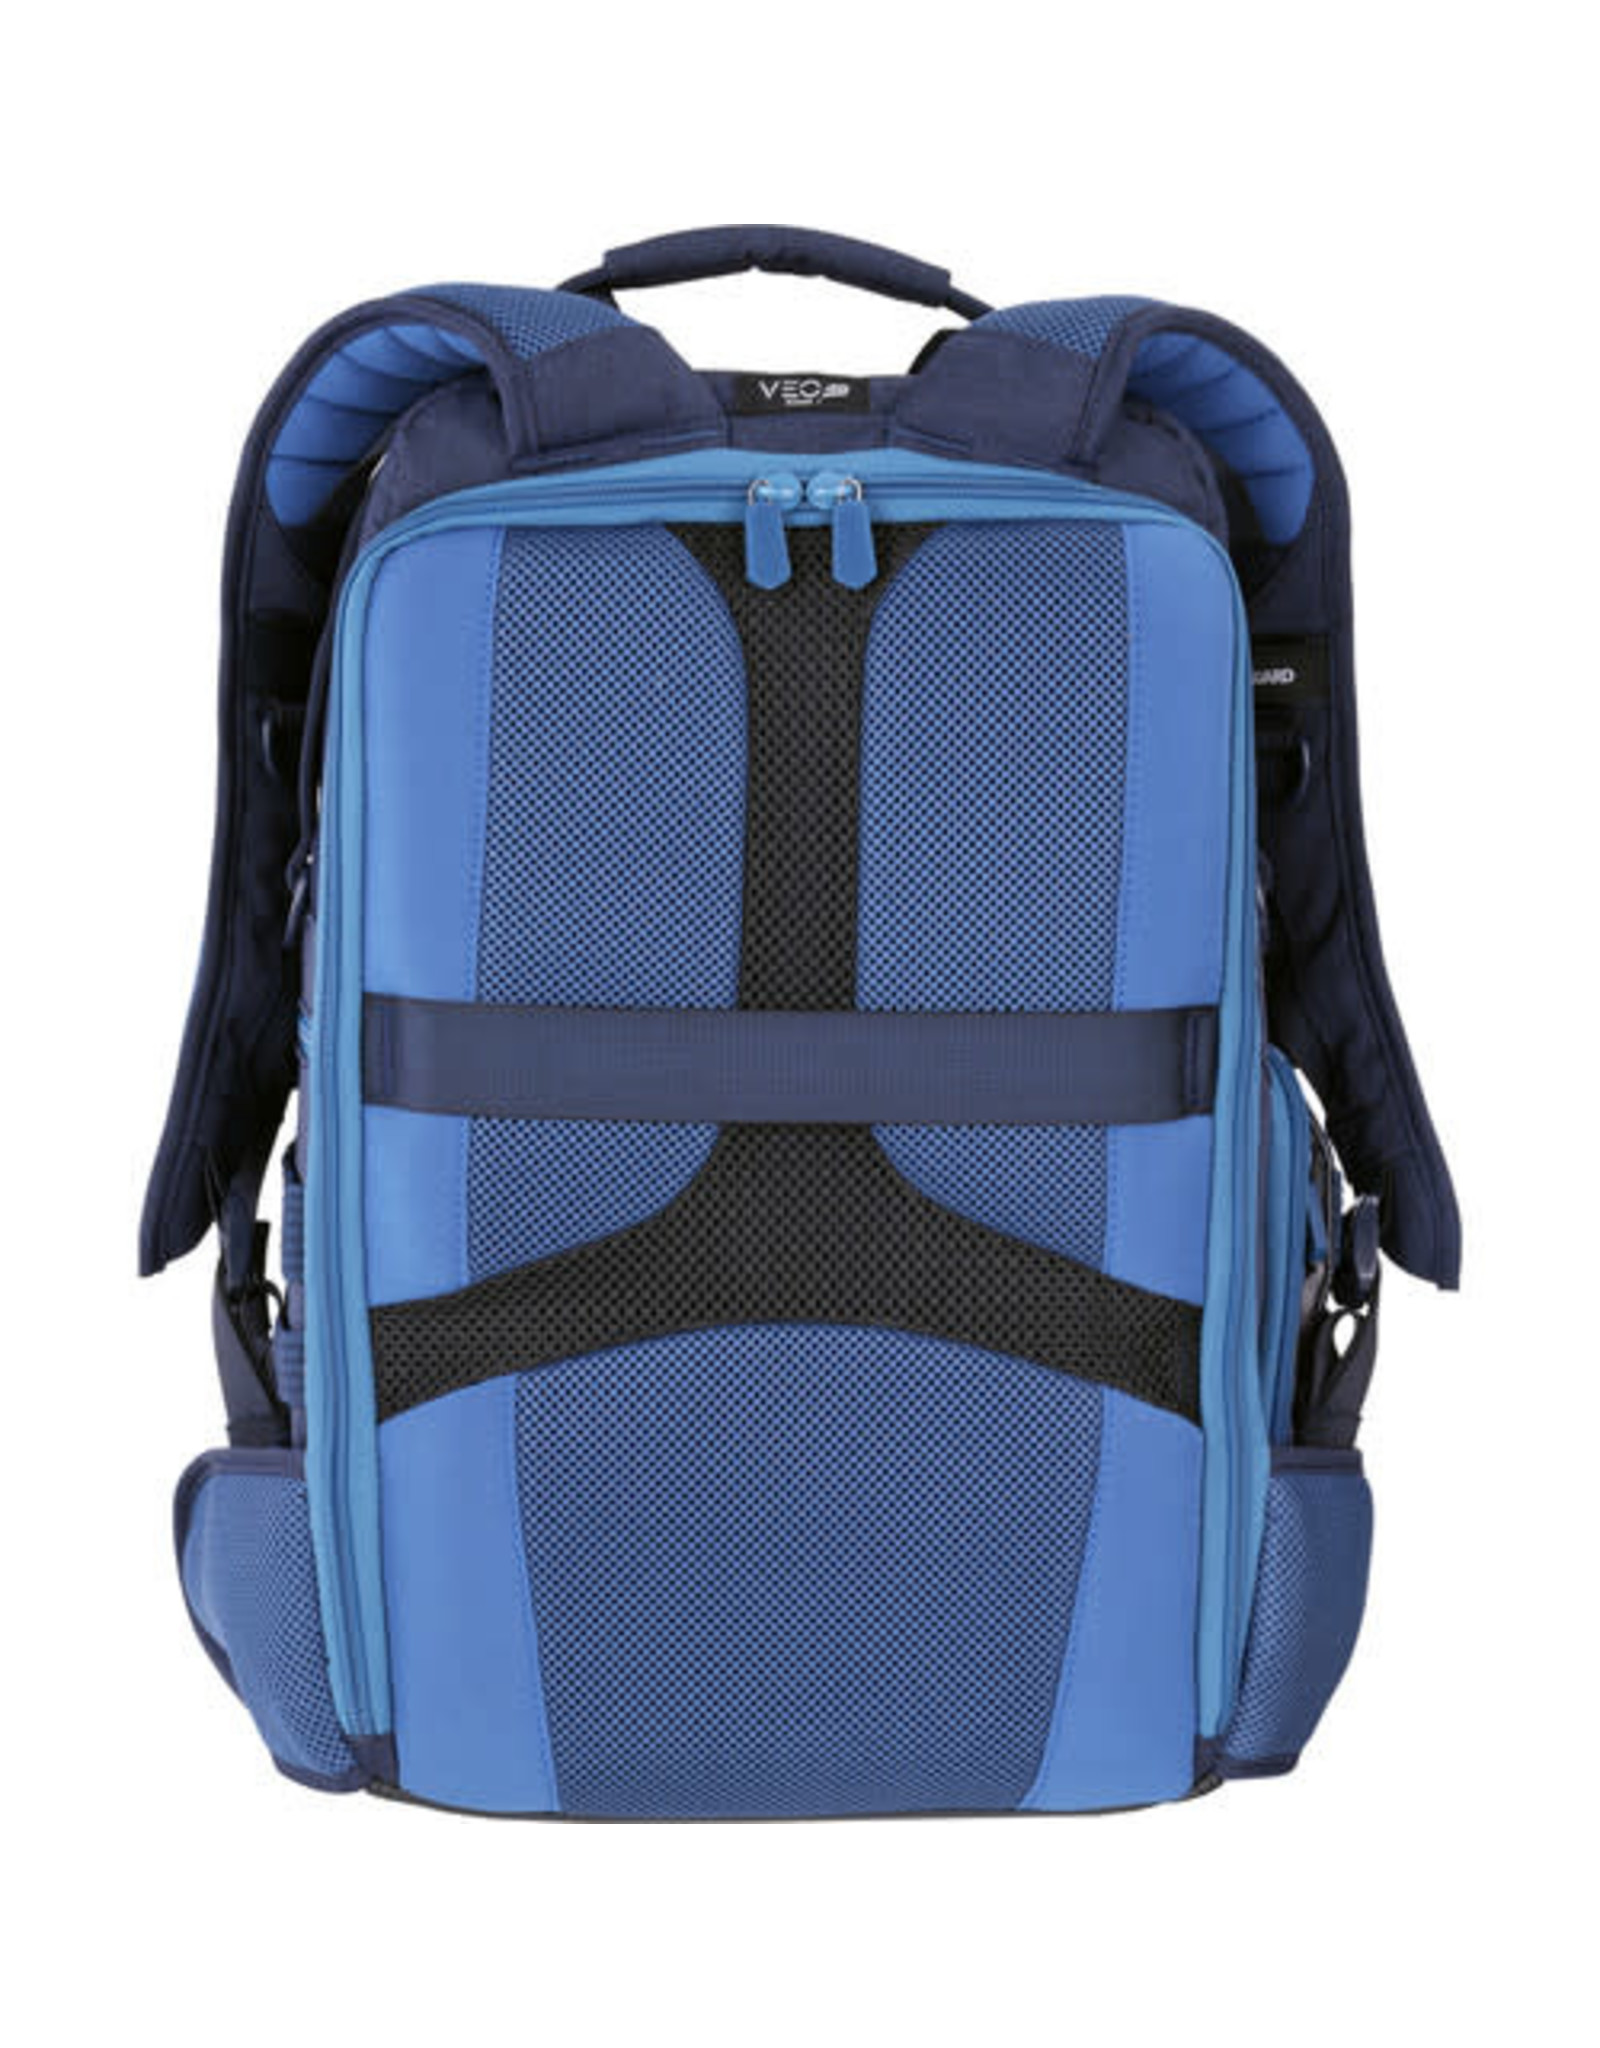 Vanguard Vanguard VEO RANGE 48 T Backpack (Choose Color)